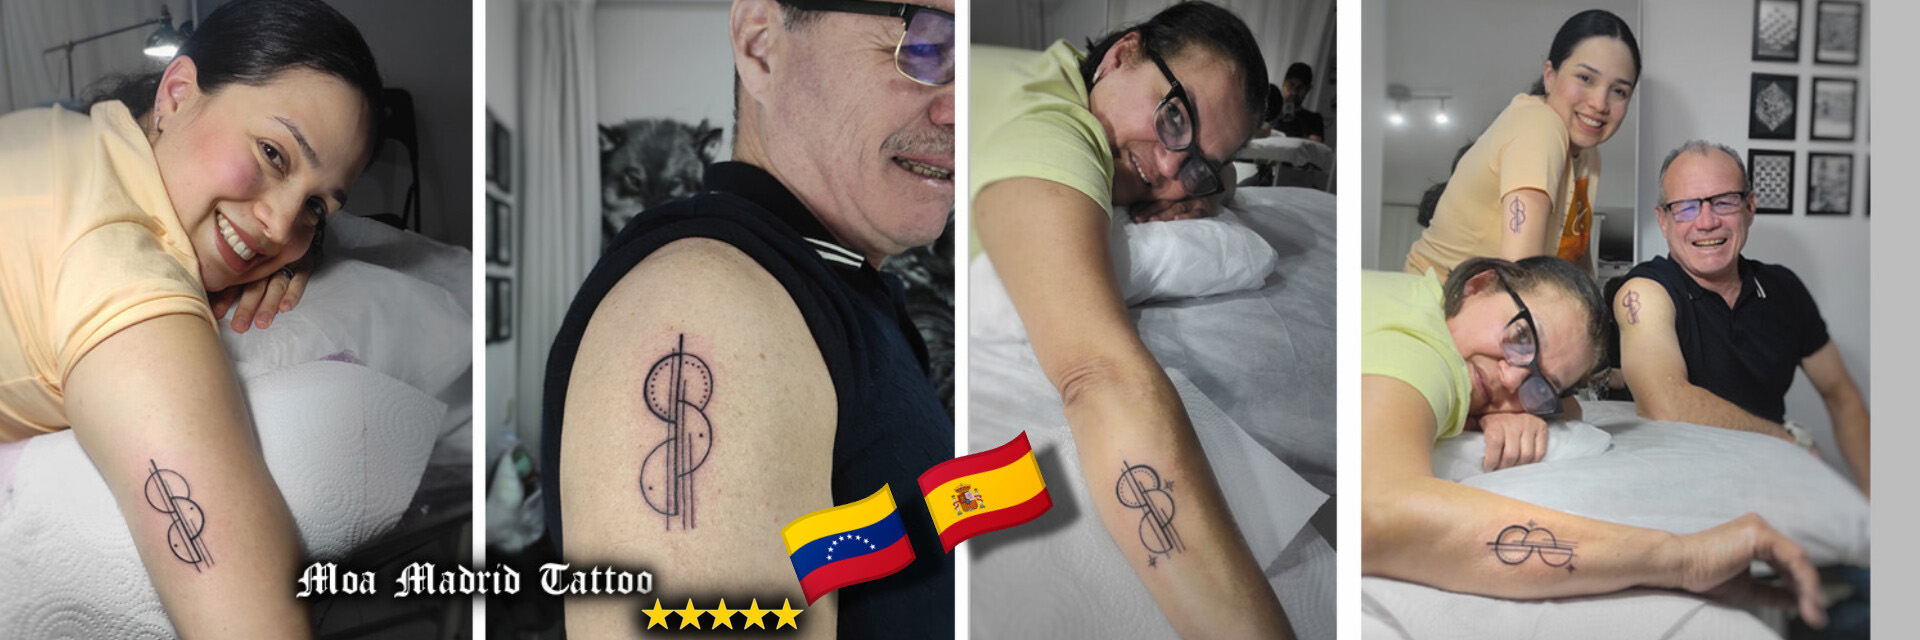 Opiniones de clientes sobre Moa Madrid Tattoo - Tatuaje en familia: mismo diseño con variaciones